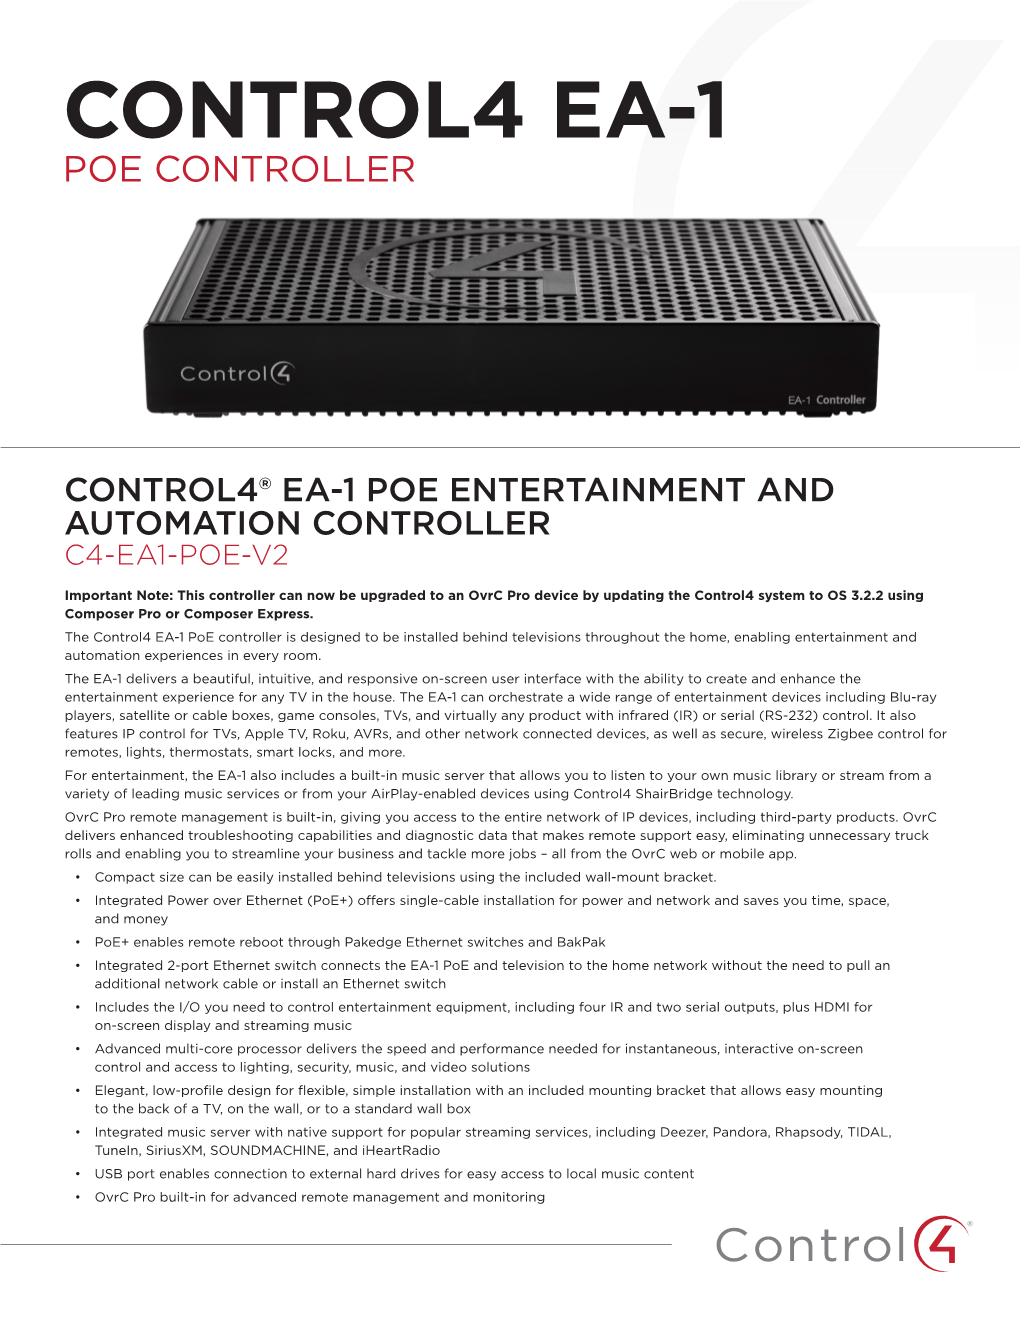 Control4® Ea-1 Poe Entertainment and Automation Controller C4-Ea1-Poe-V2